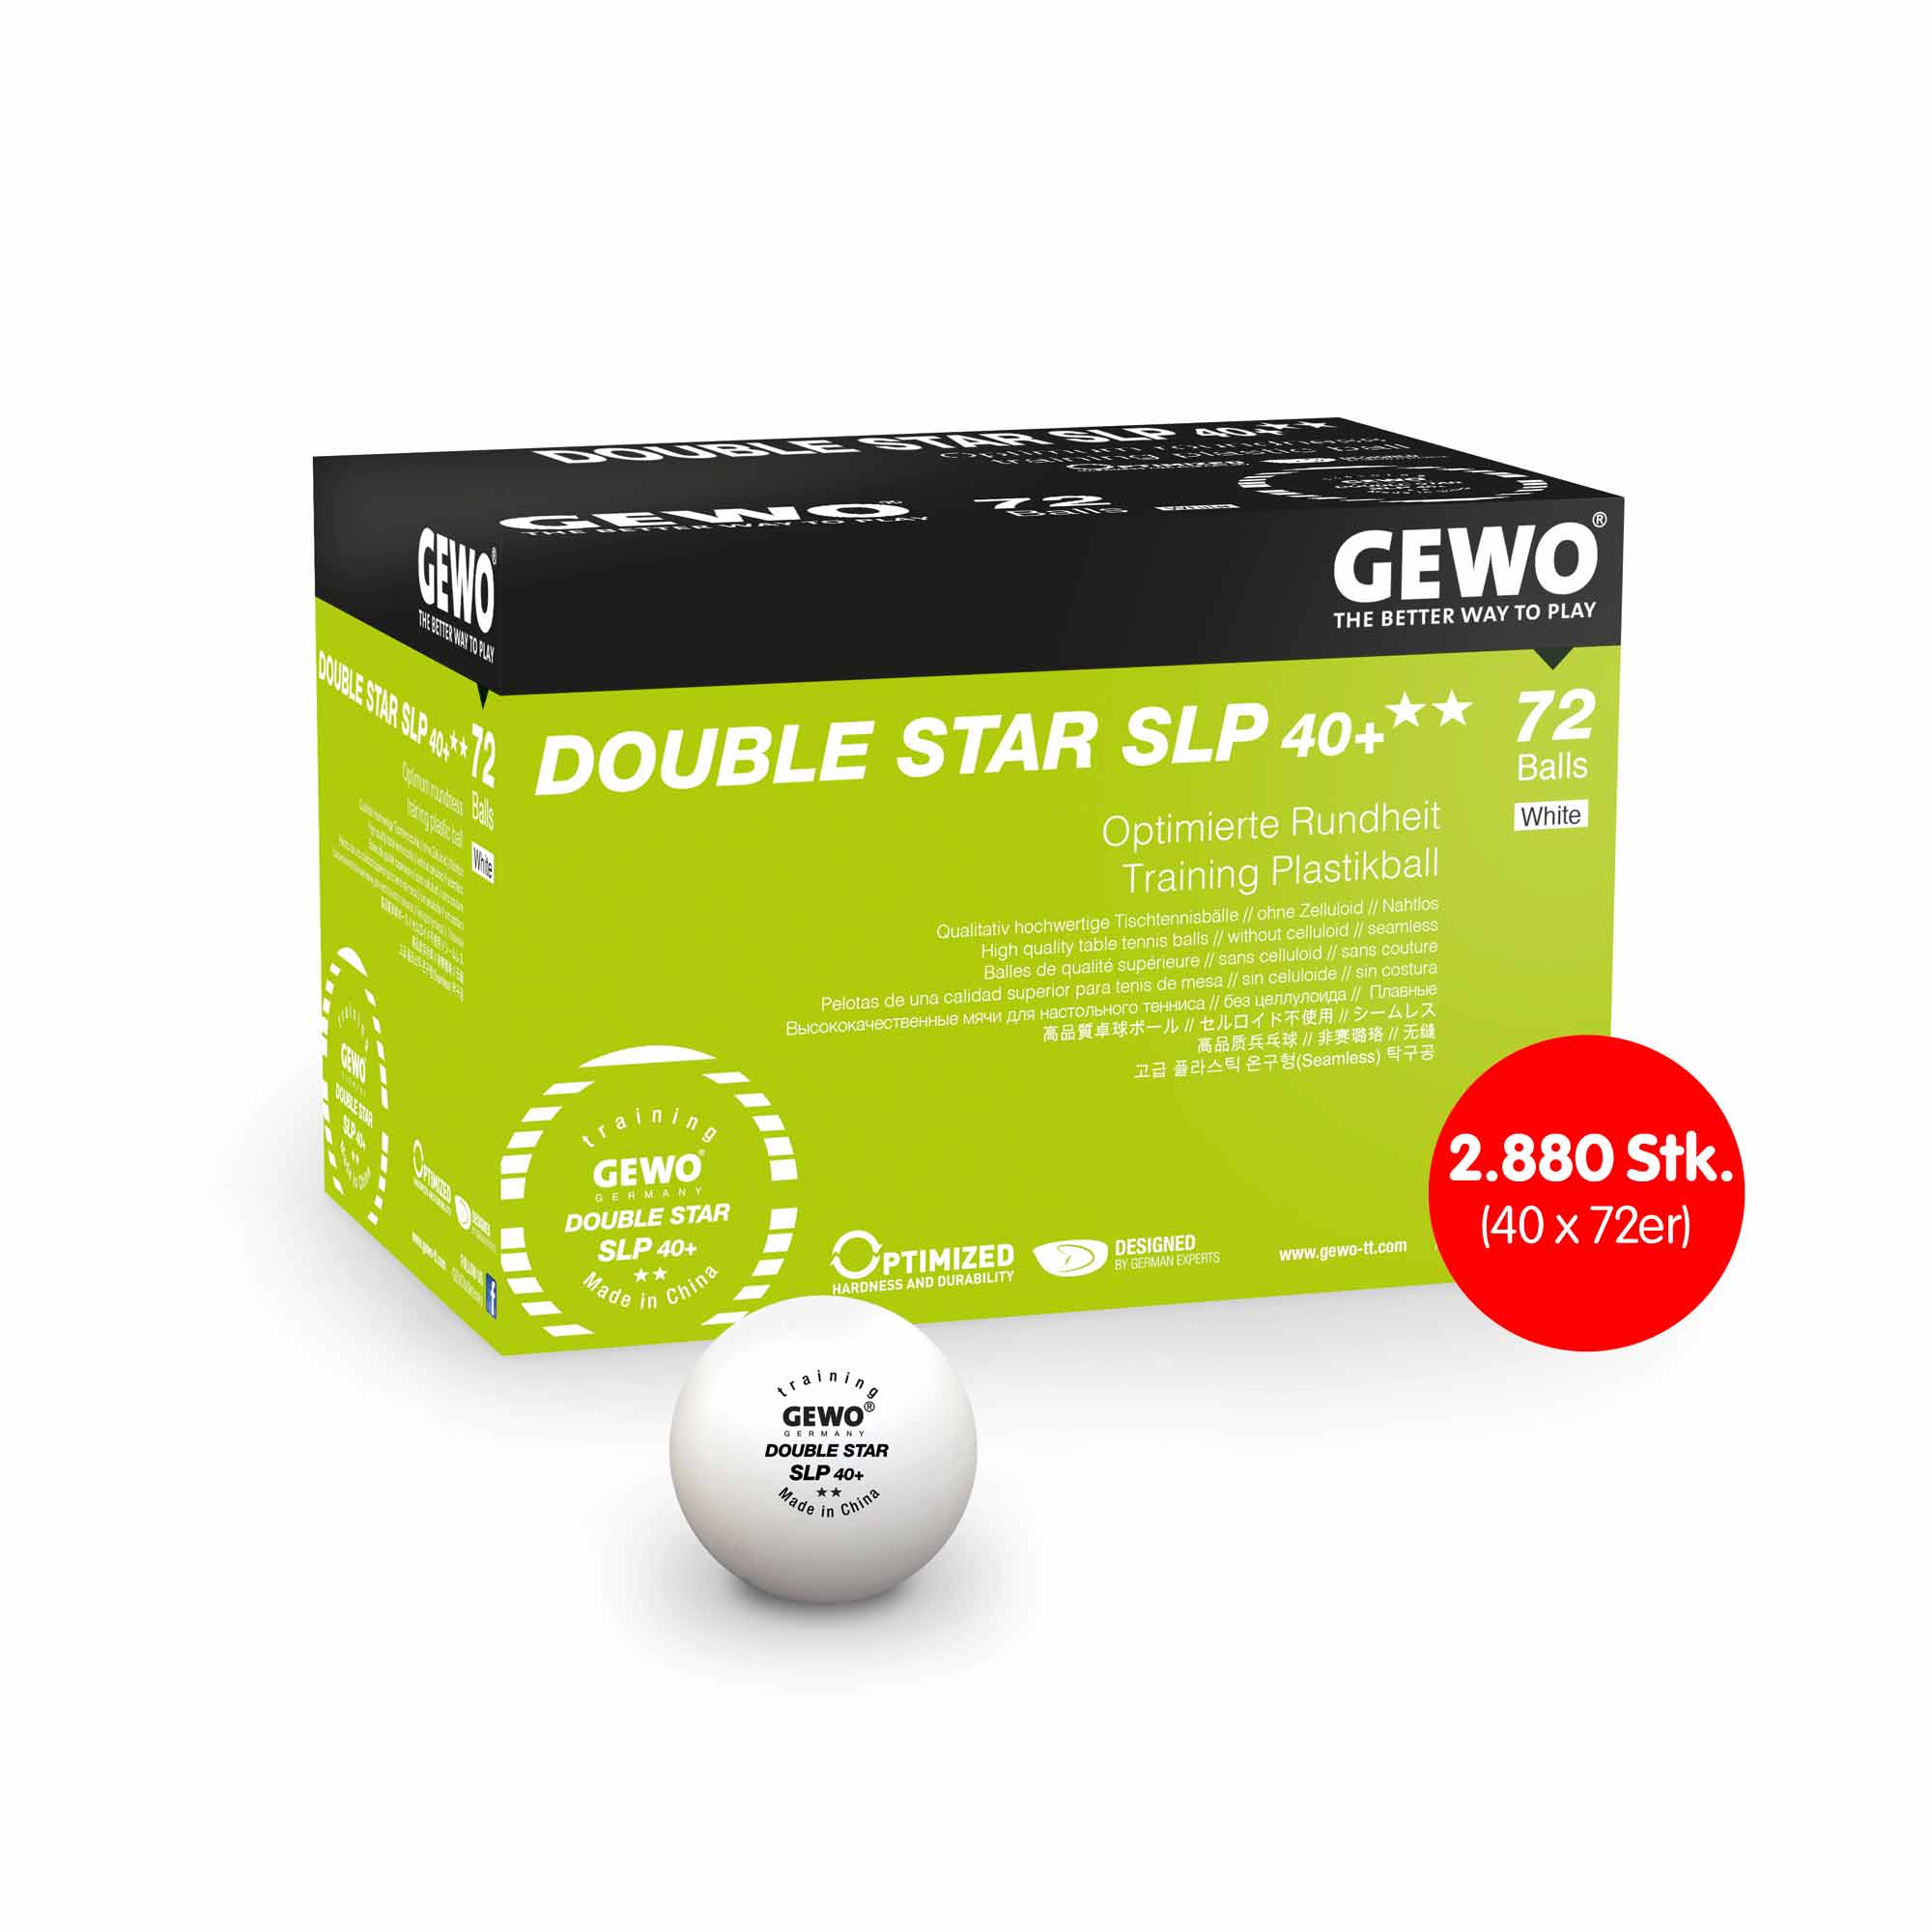 GEWO Ball Double Star SLP40+ 2880 pcs (40 x 72er) white